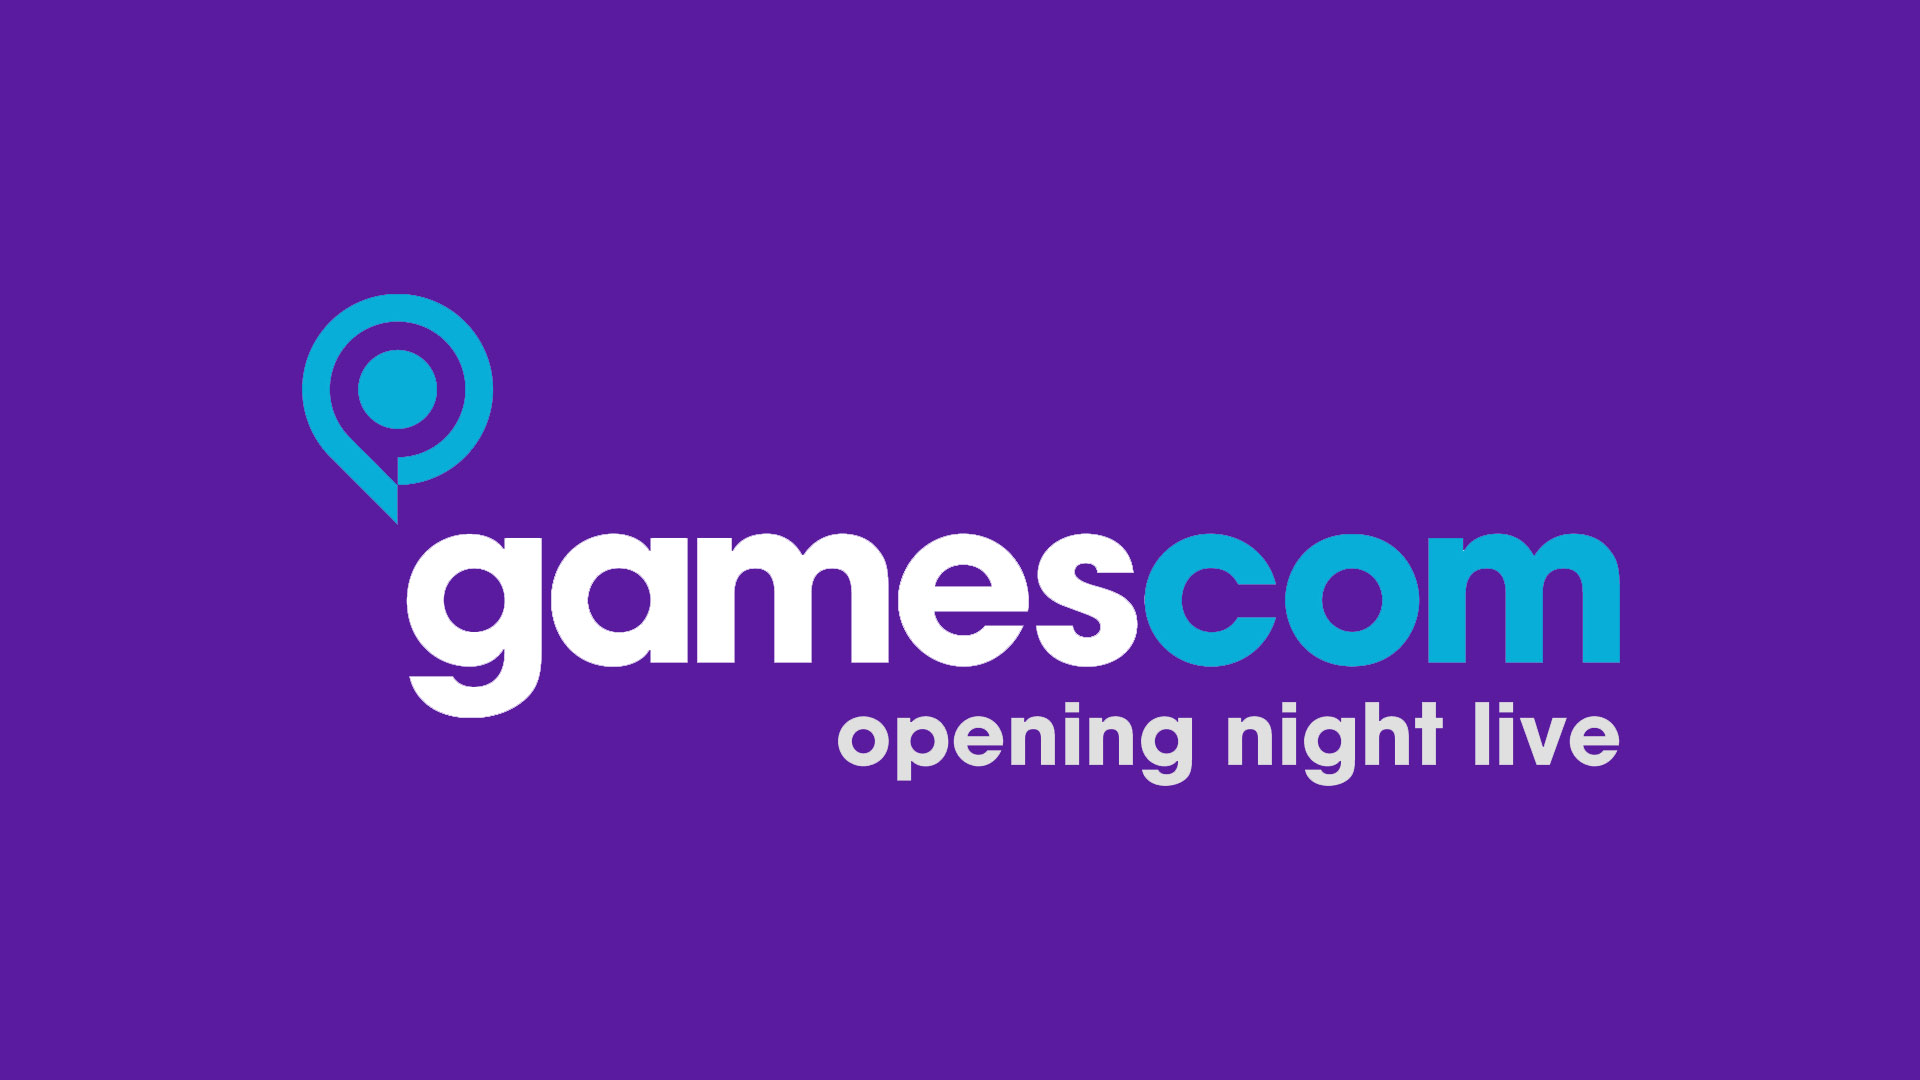 Gamescom Openig નાઇટ લાઈવ